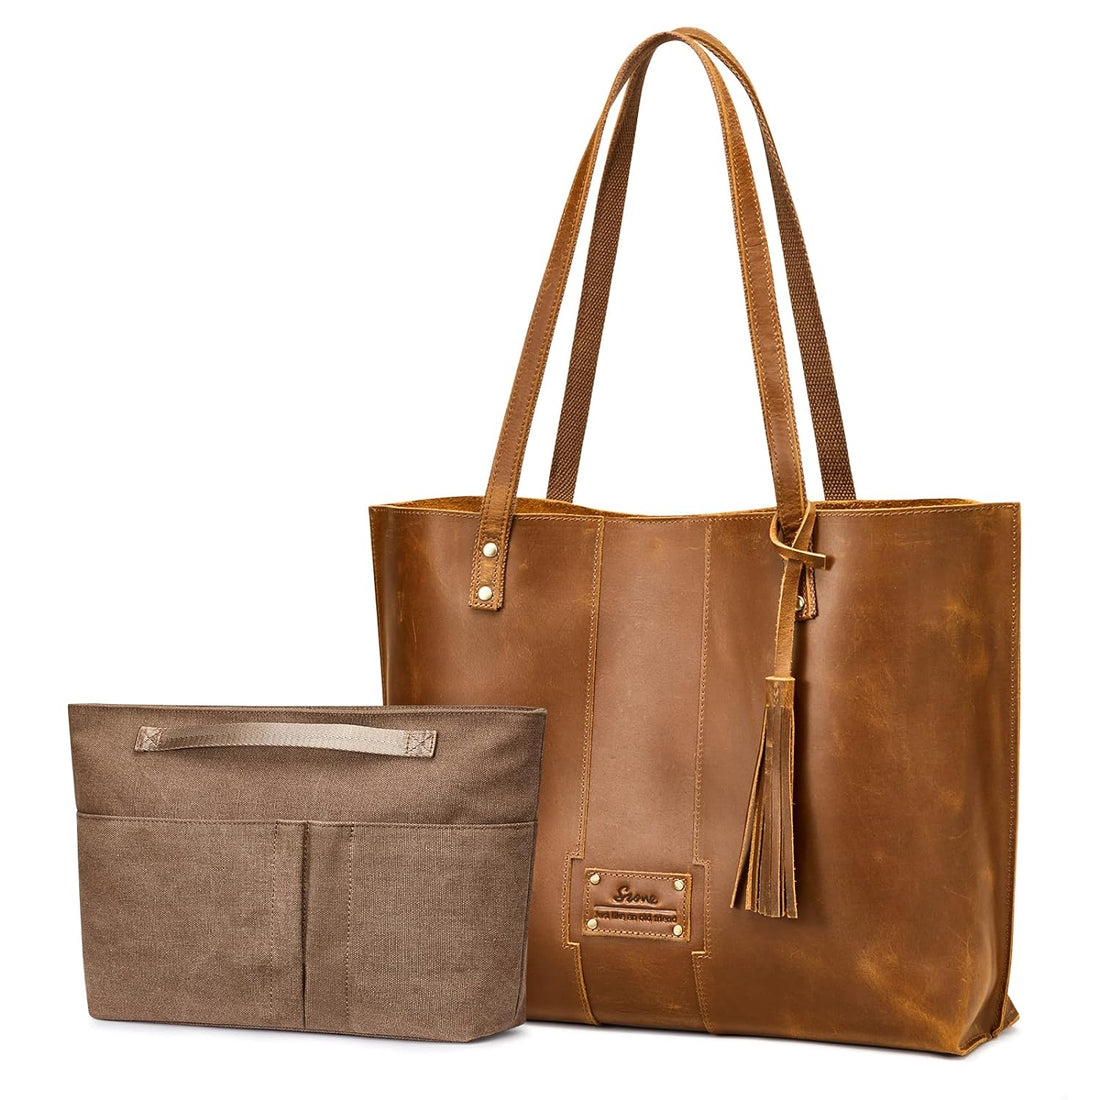 S-ZONE Women Genuine Leather Shoulder Bag Vintage Work Tote Purse Crossbody Handbag, Light Brown, Large